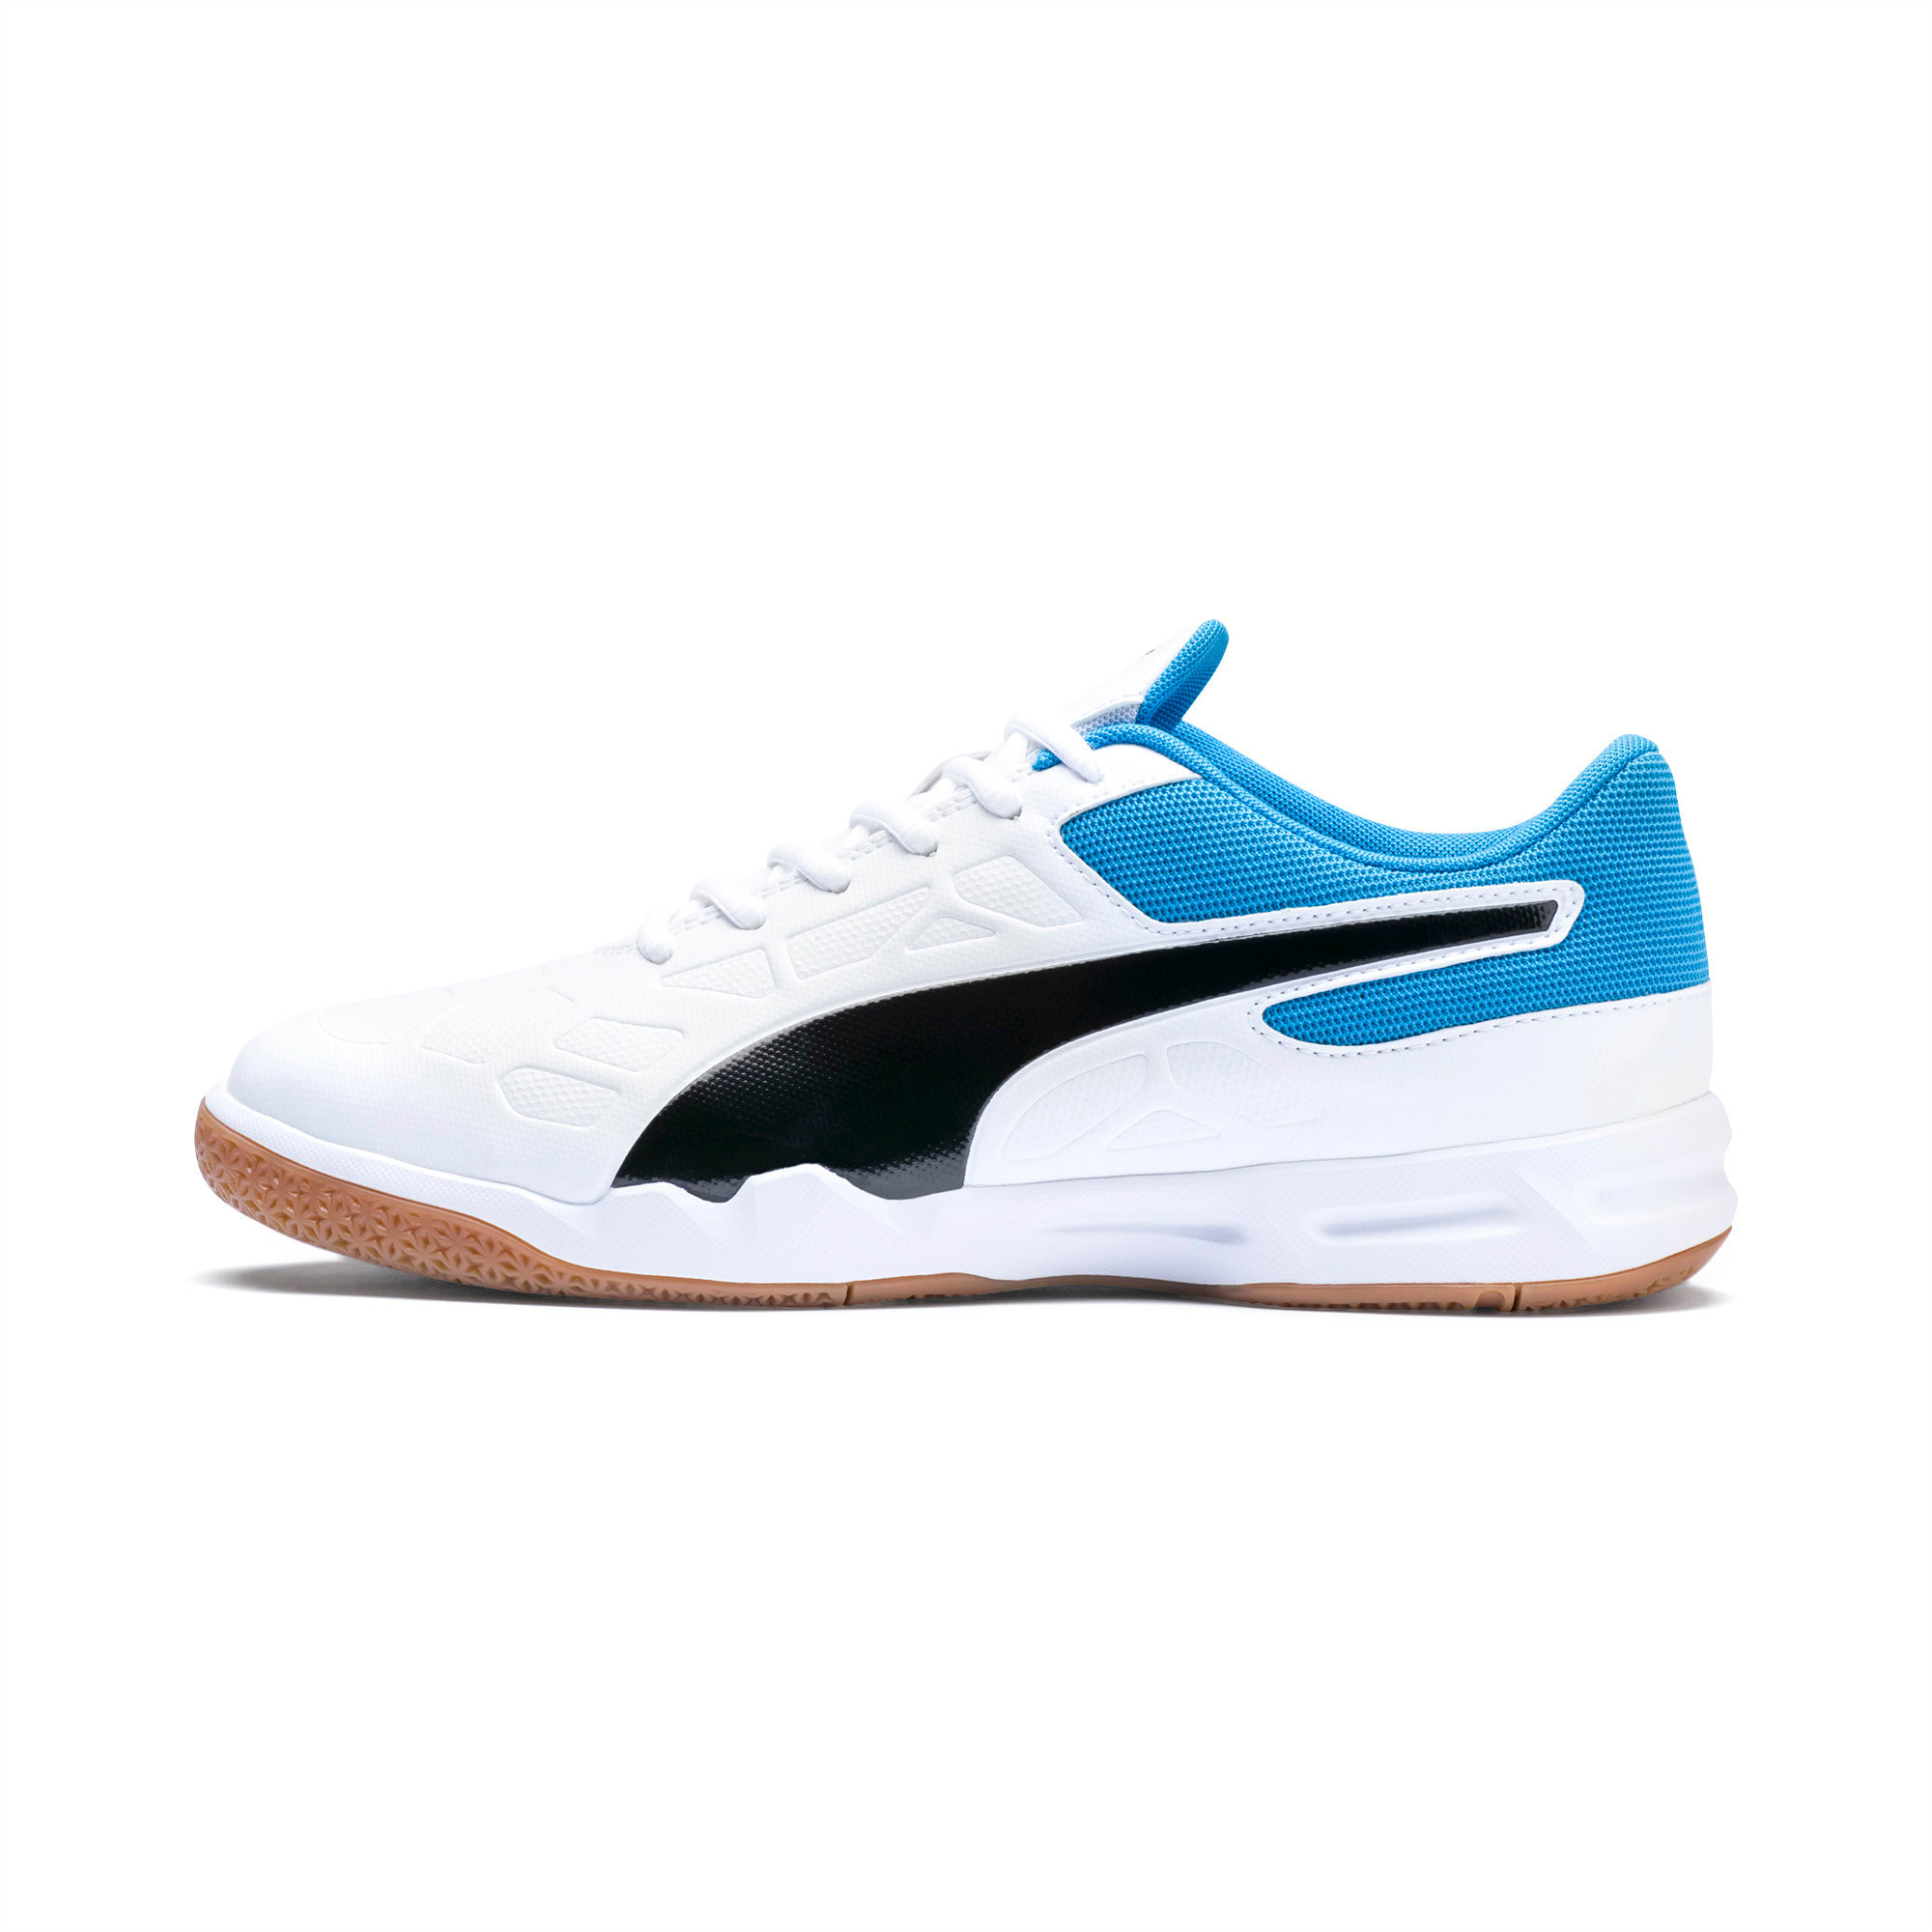 Tenaz Indoor Teamsport Shoes | White-Black-Bleu Azur-Gum | PUMA Shoes | PUMA